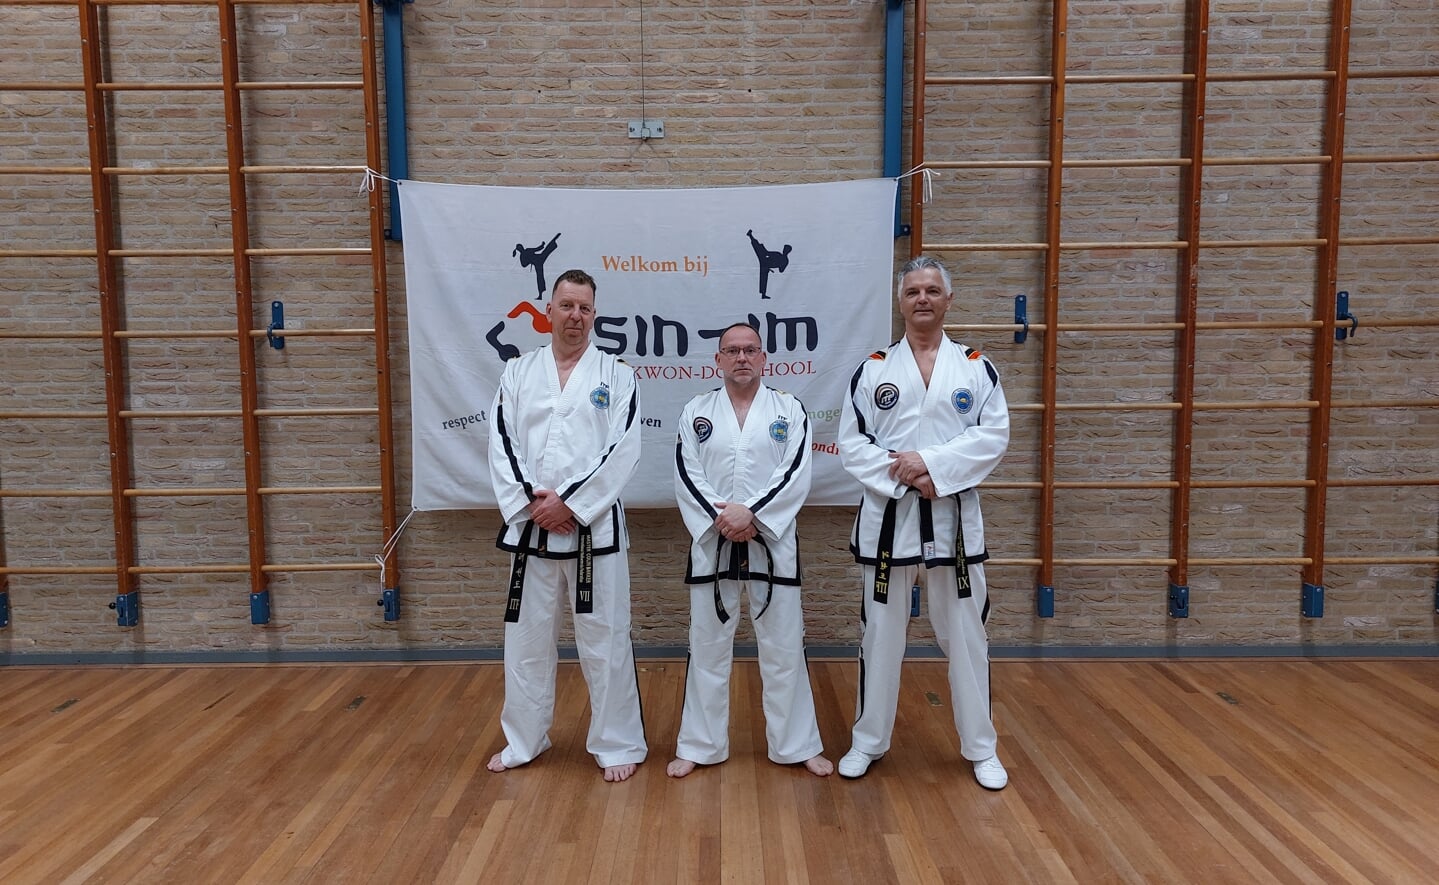 Taekwondo School Dekker uit Boxtel nam zaterdag deel aan een open ITF-trainingsdag in Stroe. 